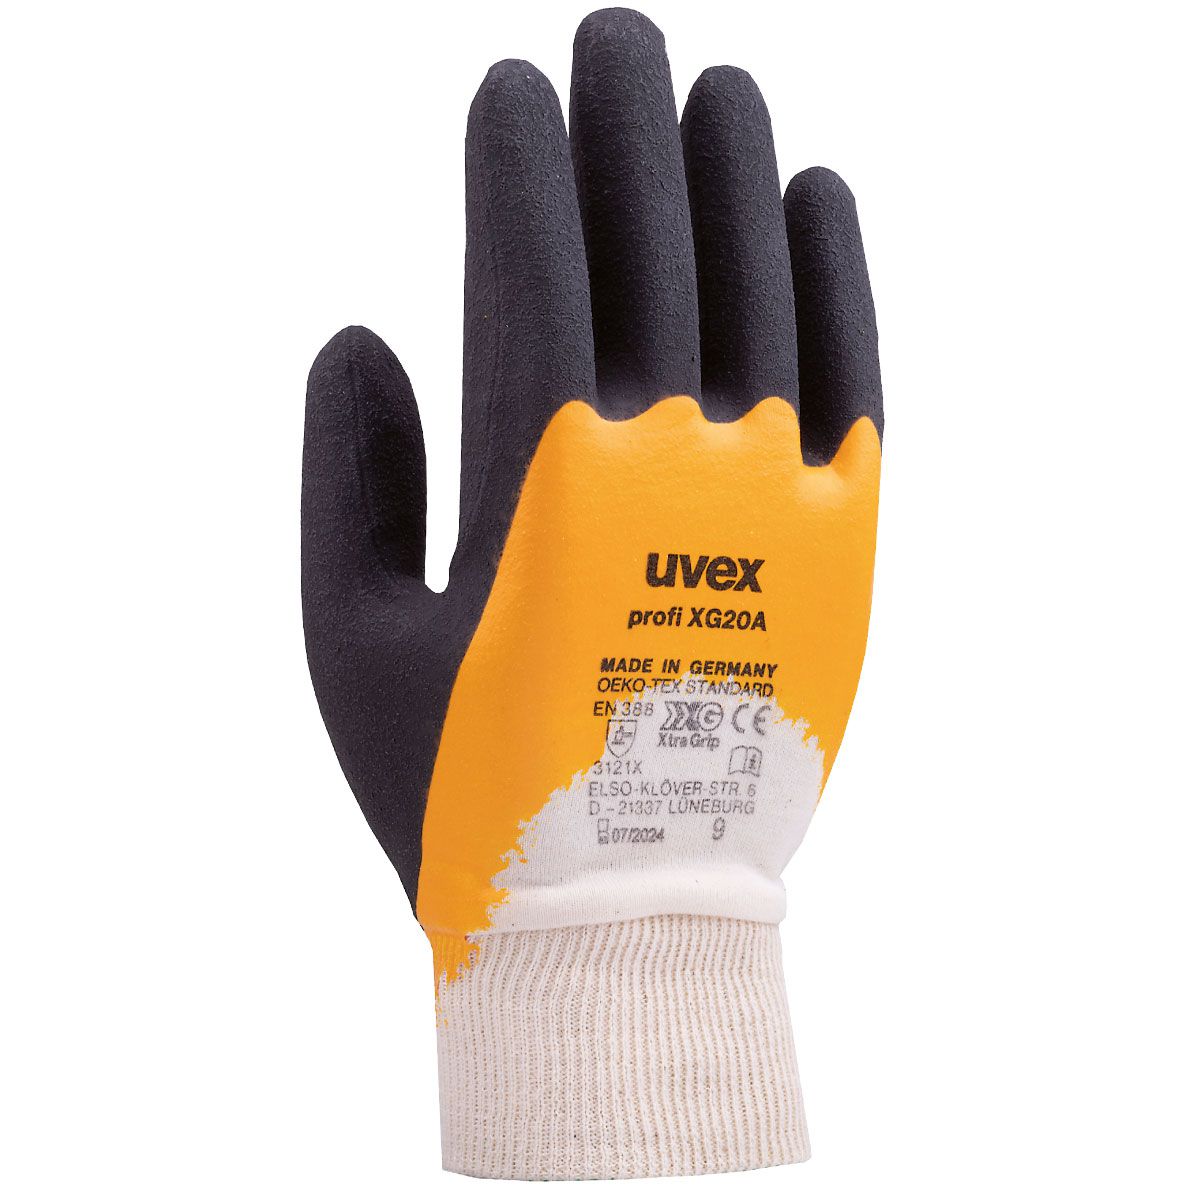 SALE: Uvex assembly protection glove profi ergo XG 20A, nitrile coating, colour: orange/black